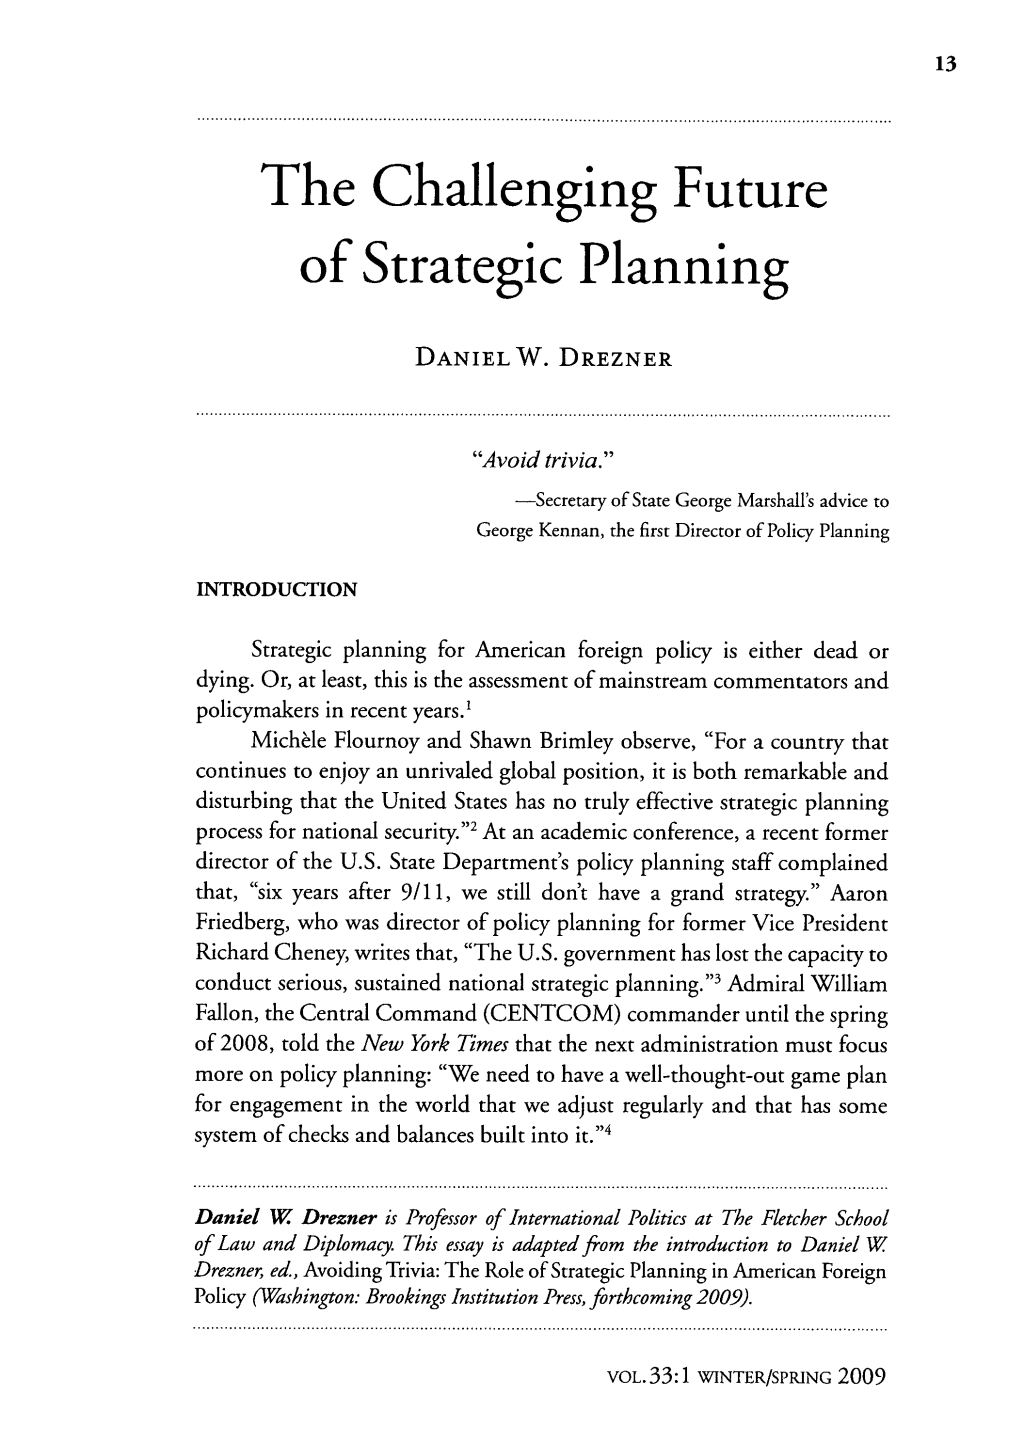 Challenging Future of Strategic Planning